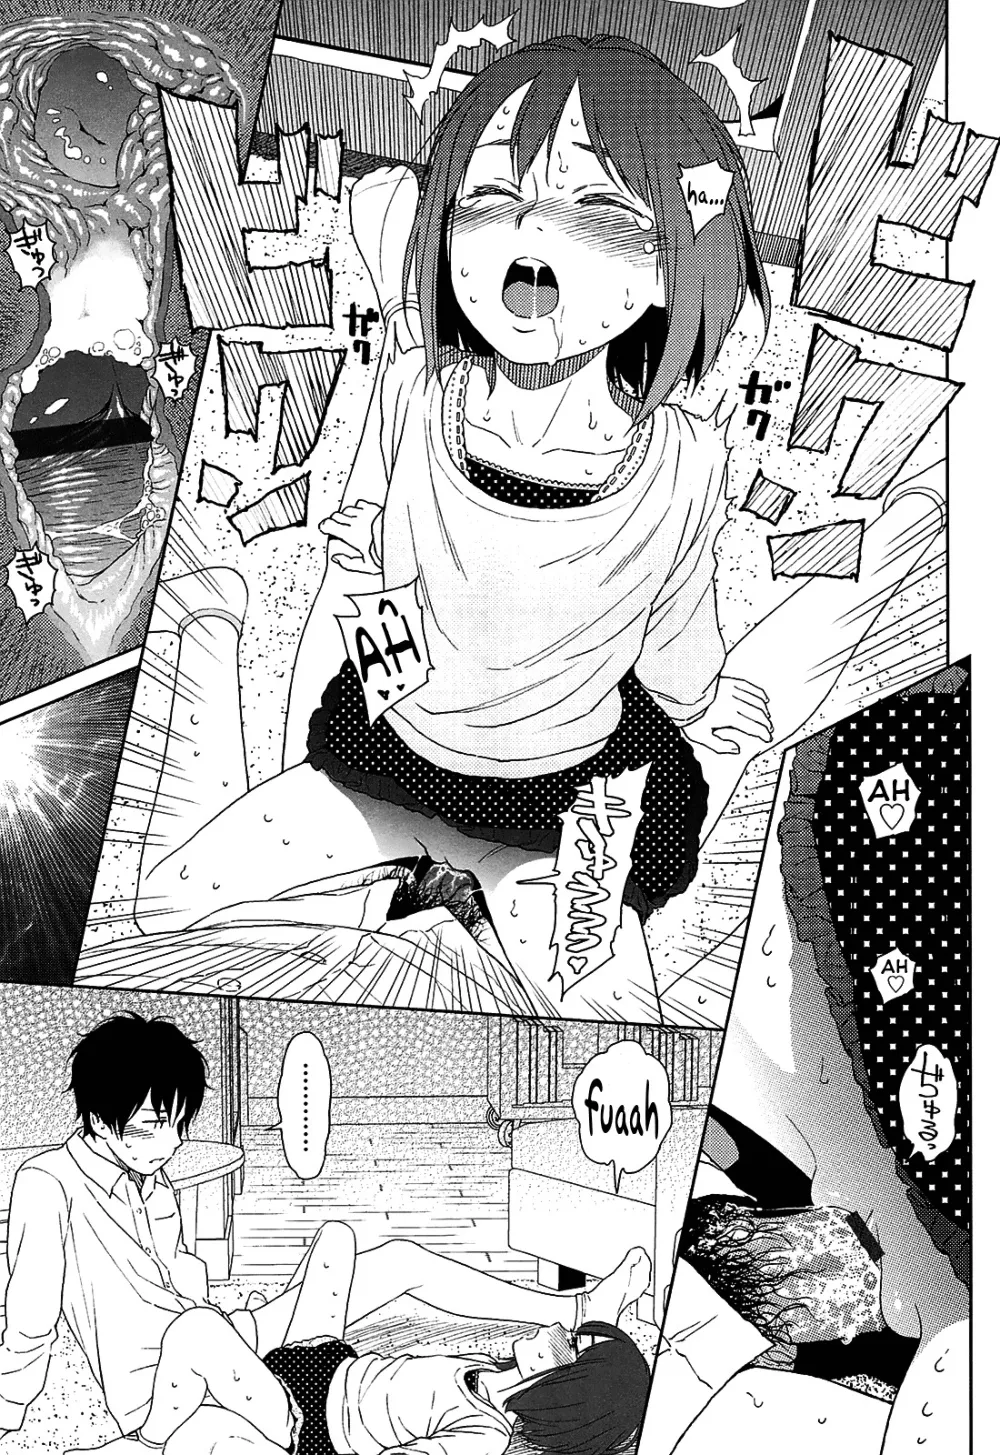 Nymphodelic - English Hentai Manga (Page 182)